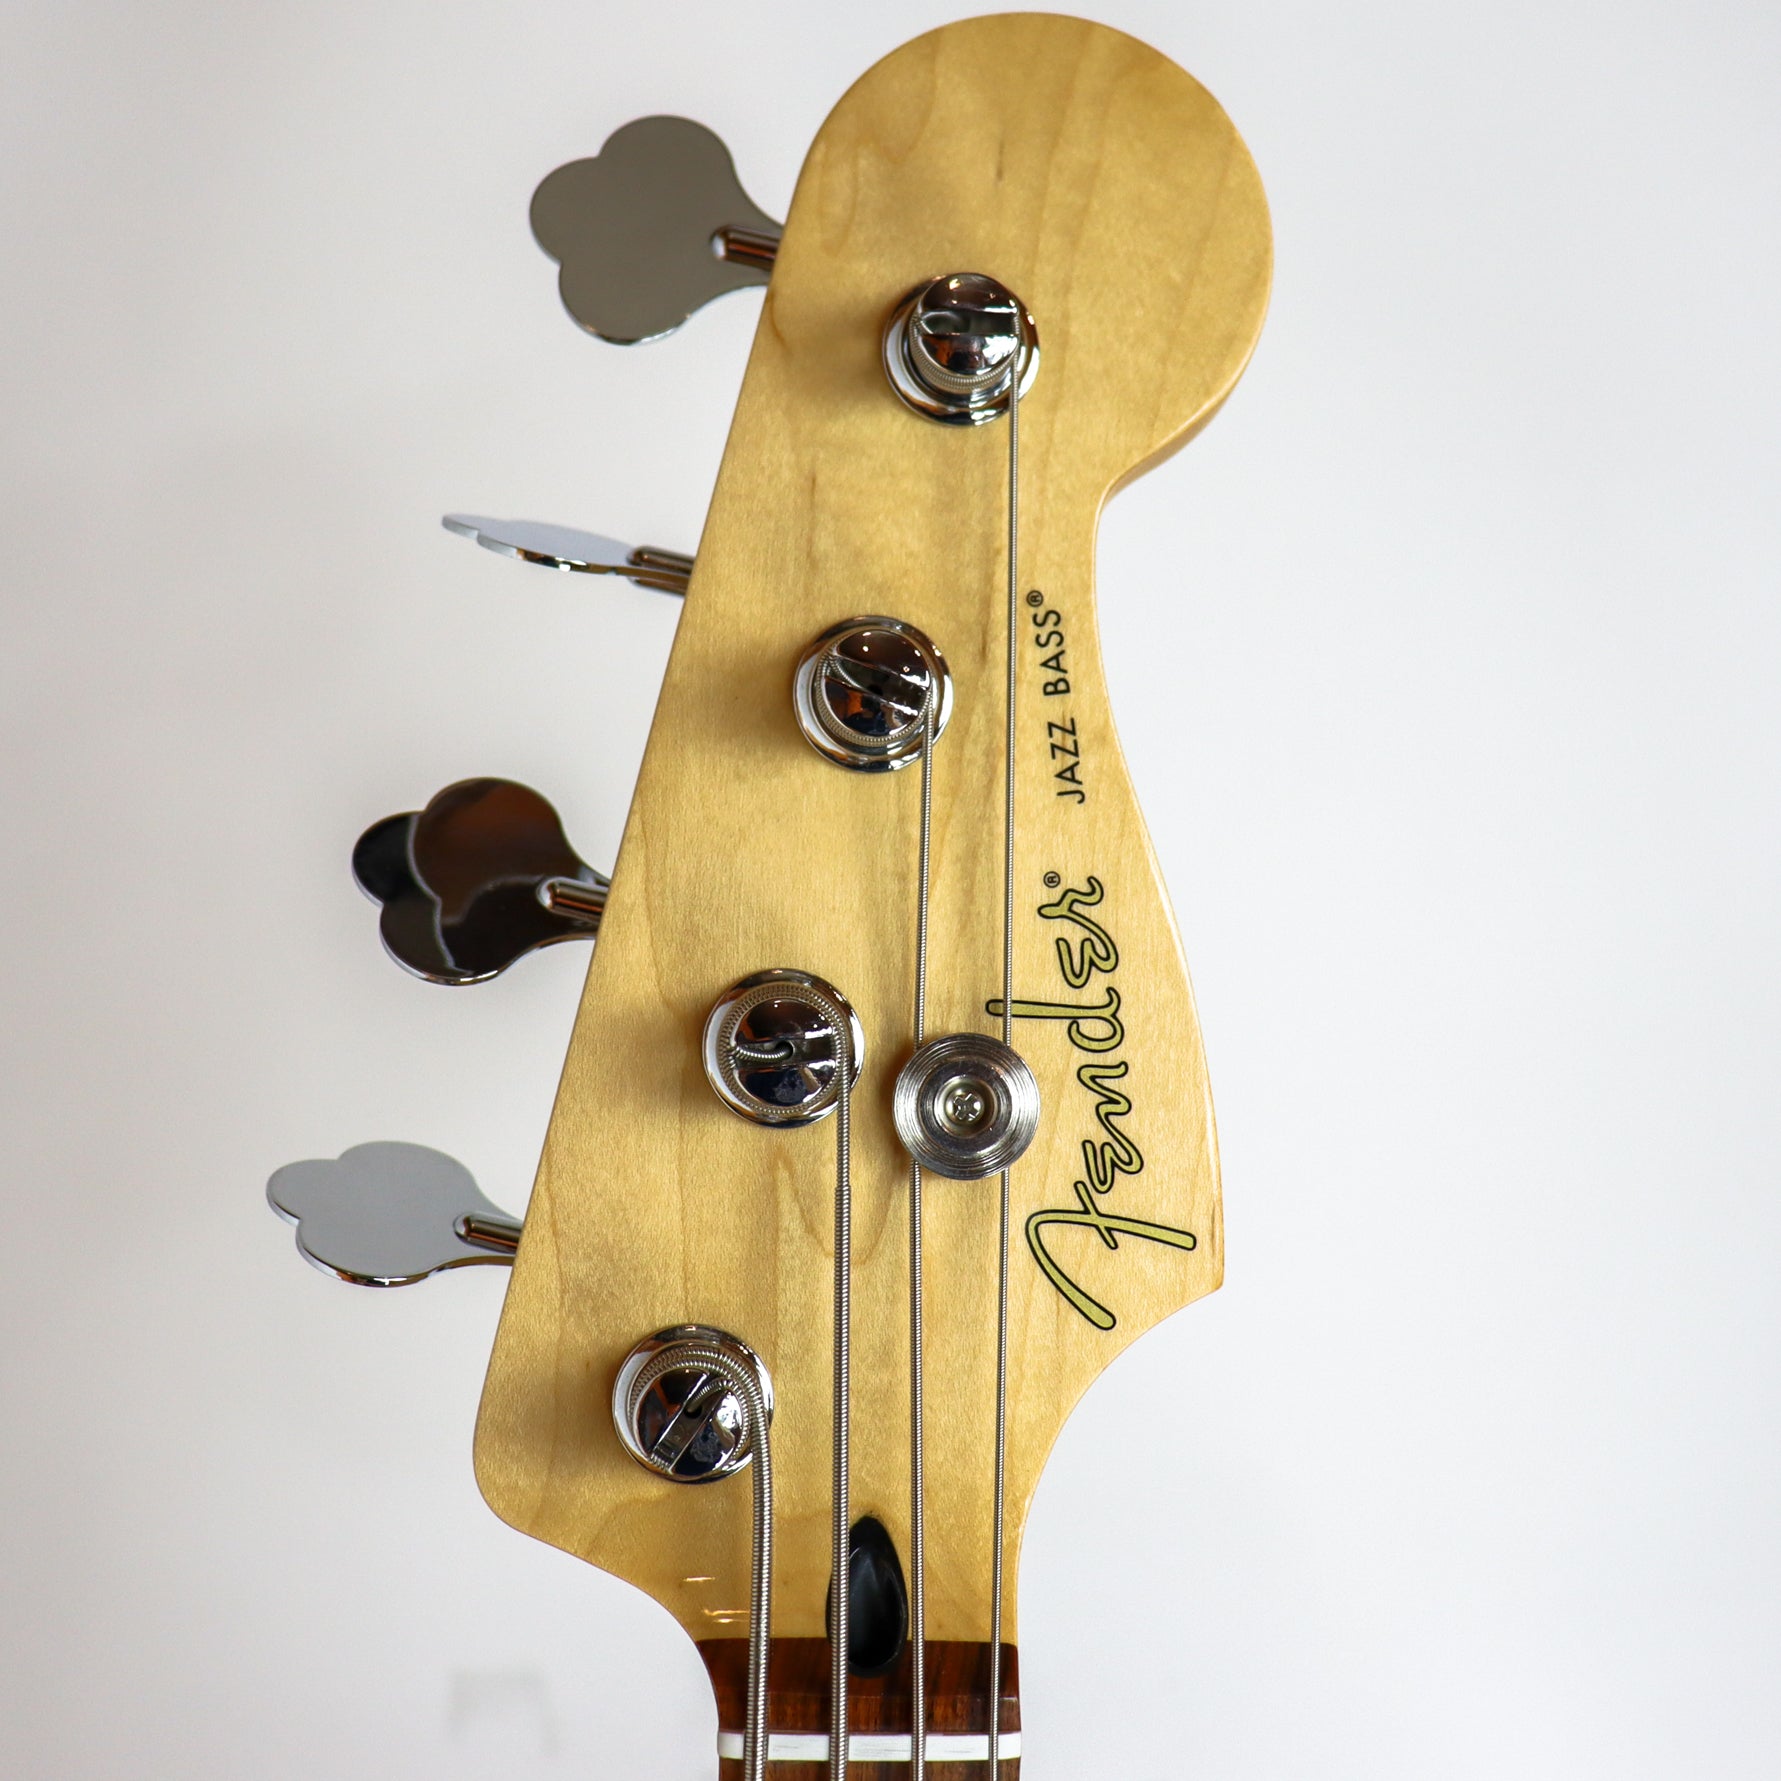 Fender Player Jazz Bass Silver